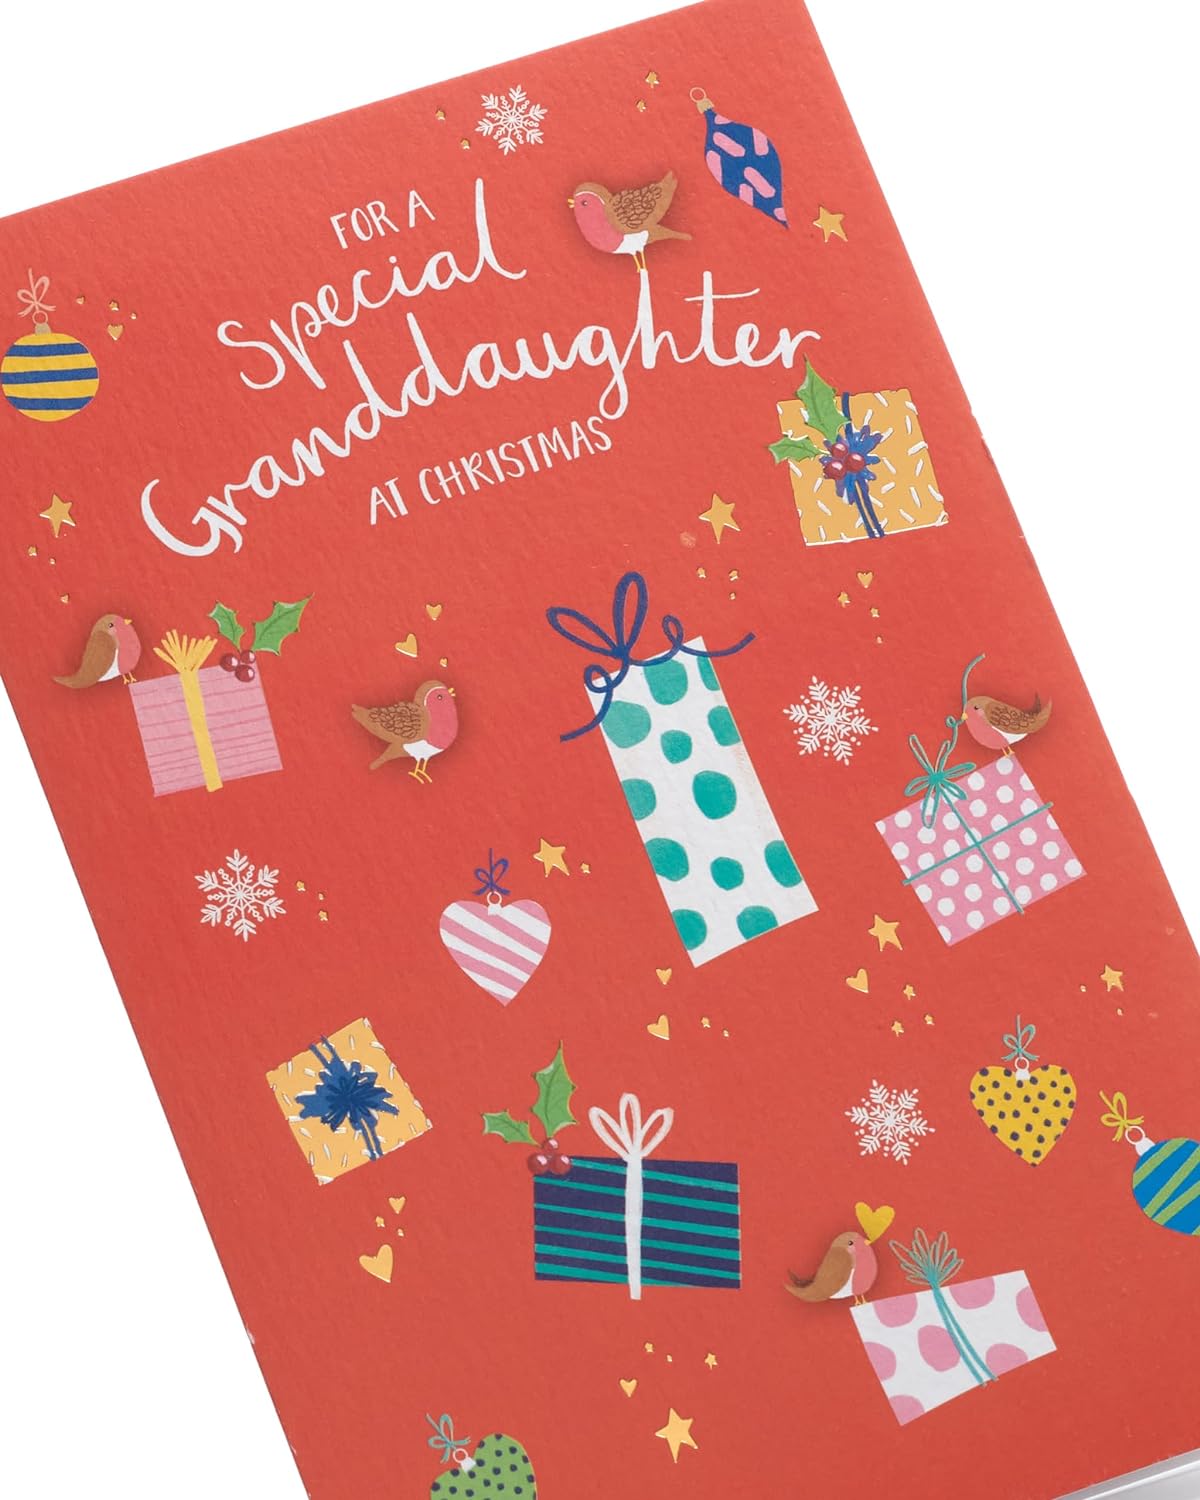 Granddaughter Christmas Card Sweet Presents Design 